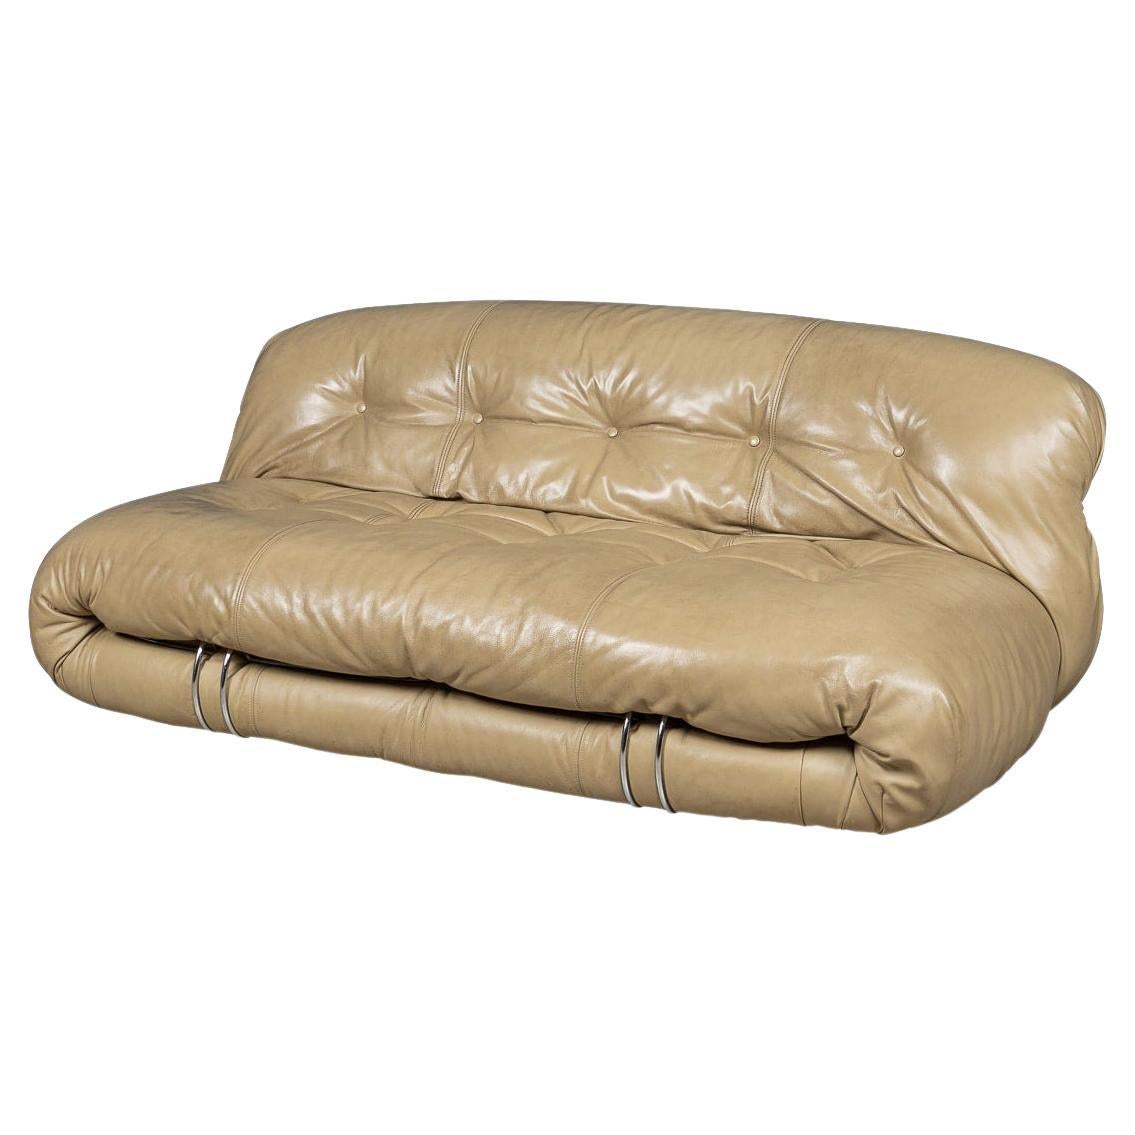 Italian 20th Century Beige "Soriana" Leather Sofa By Tobia Scarpa For Cassina